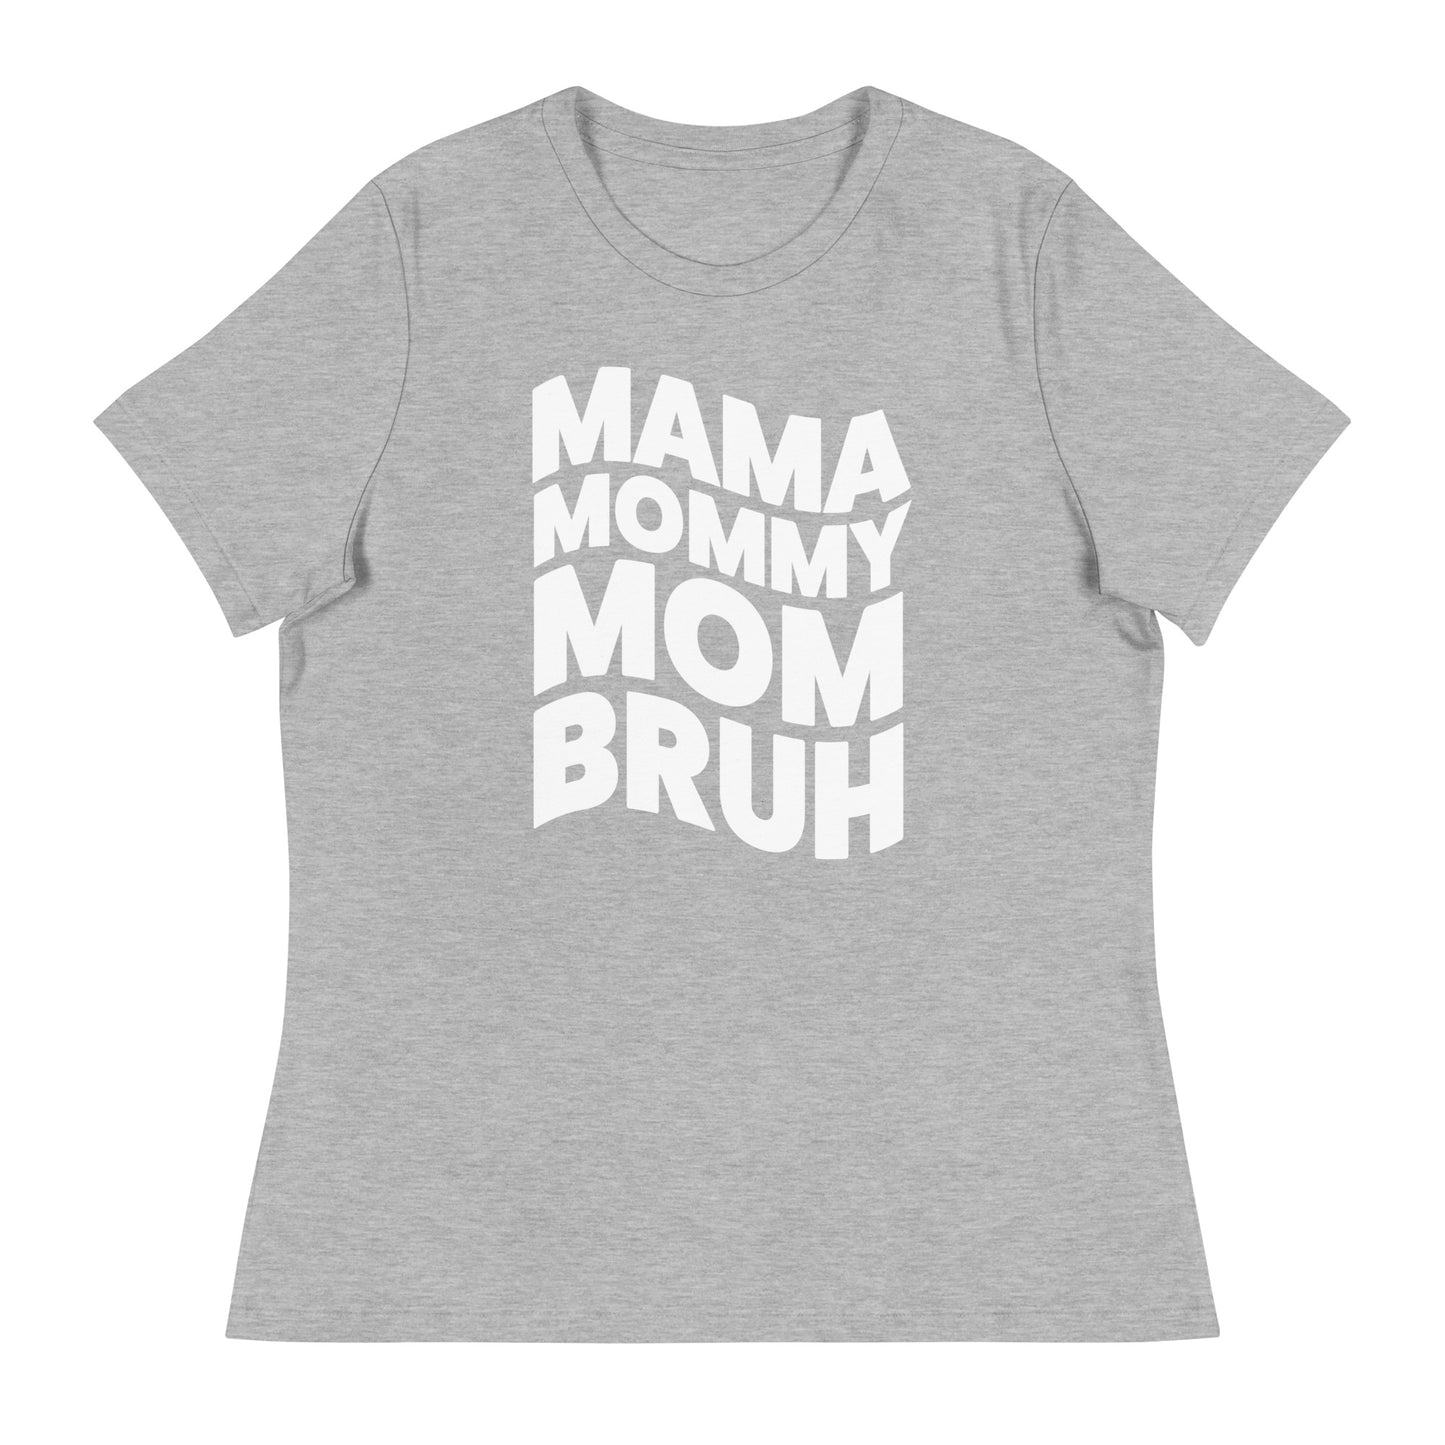 Mama Mommy Mom Bruh Women's Tee